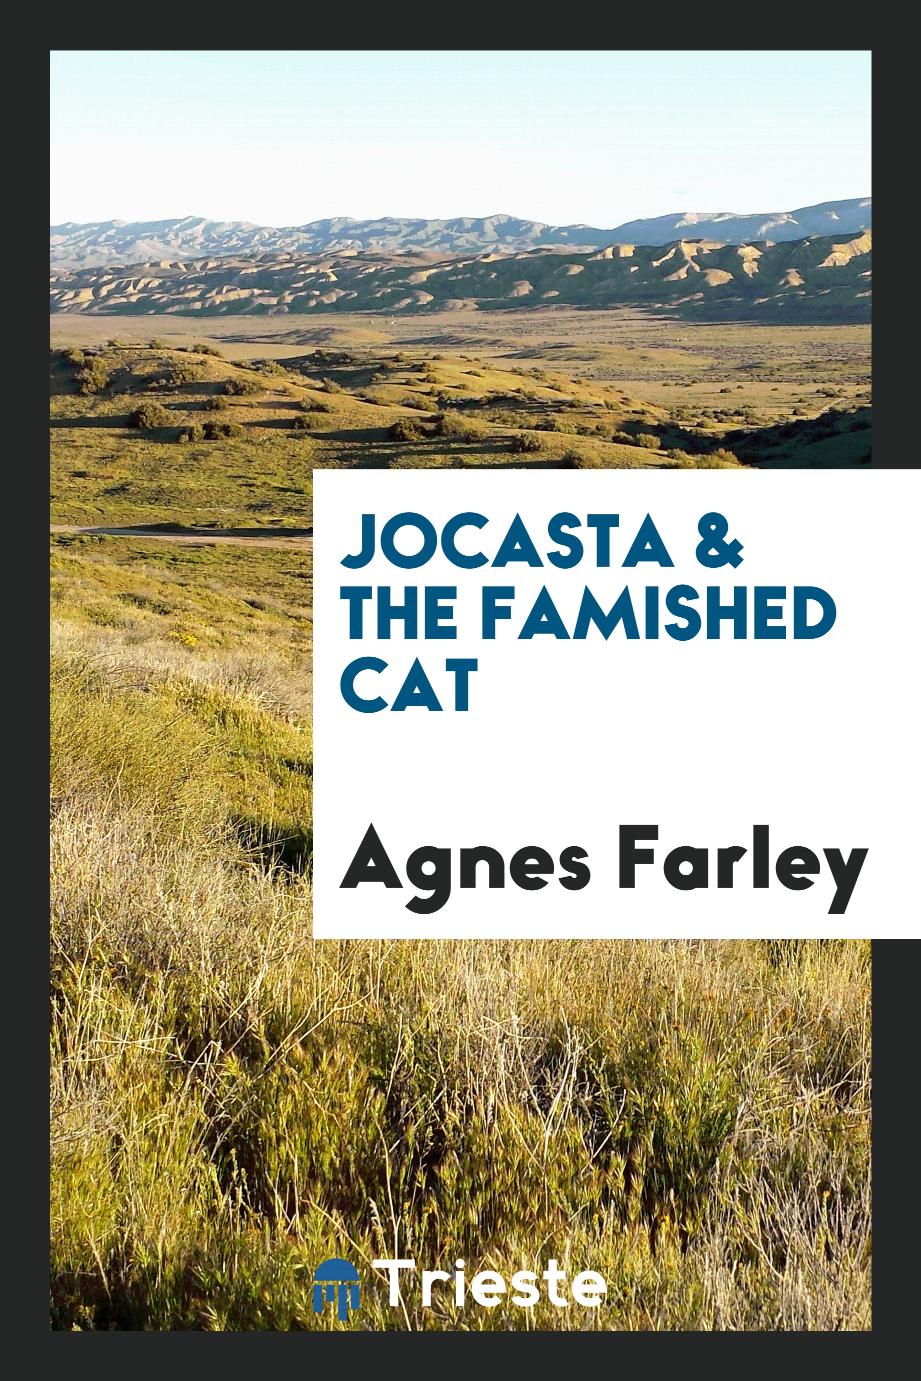 Jocasta & The famished cat